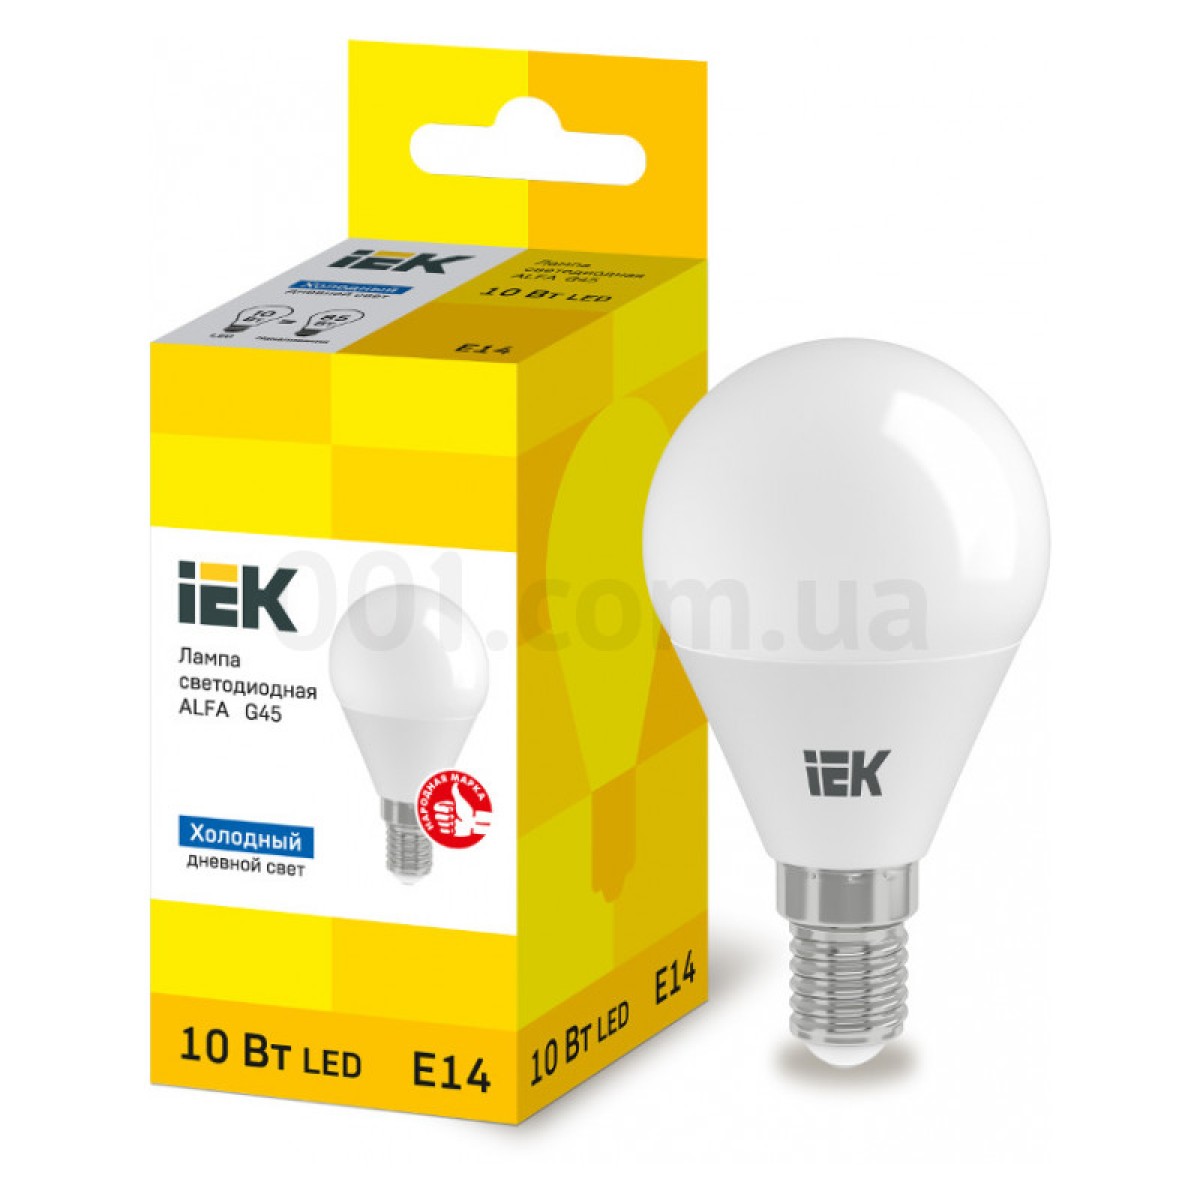 Светодиодная лампа LED ALFA G45 (шар) 10 Вт 230В 6500К E14, IEK 256_256.jpg